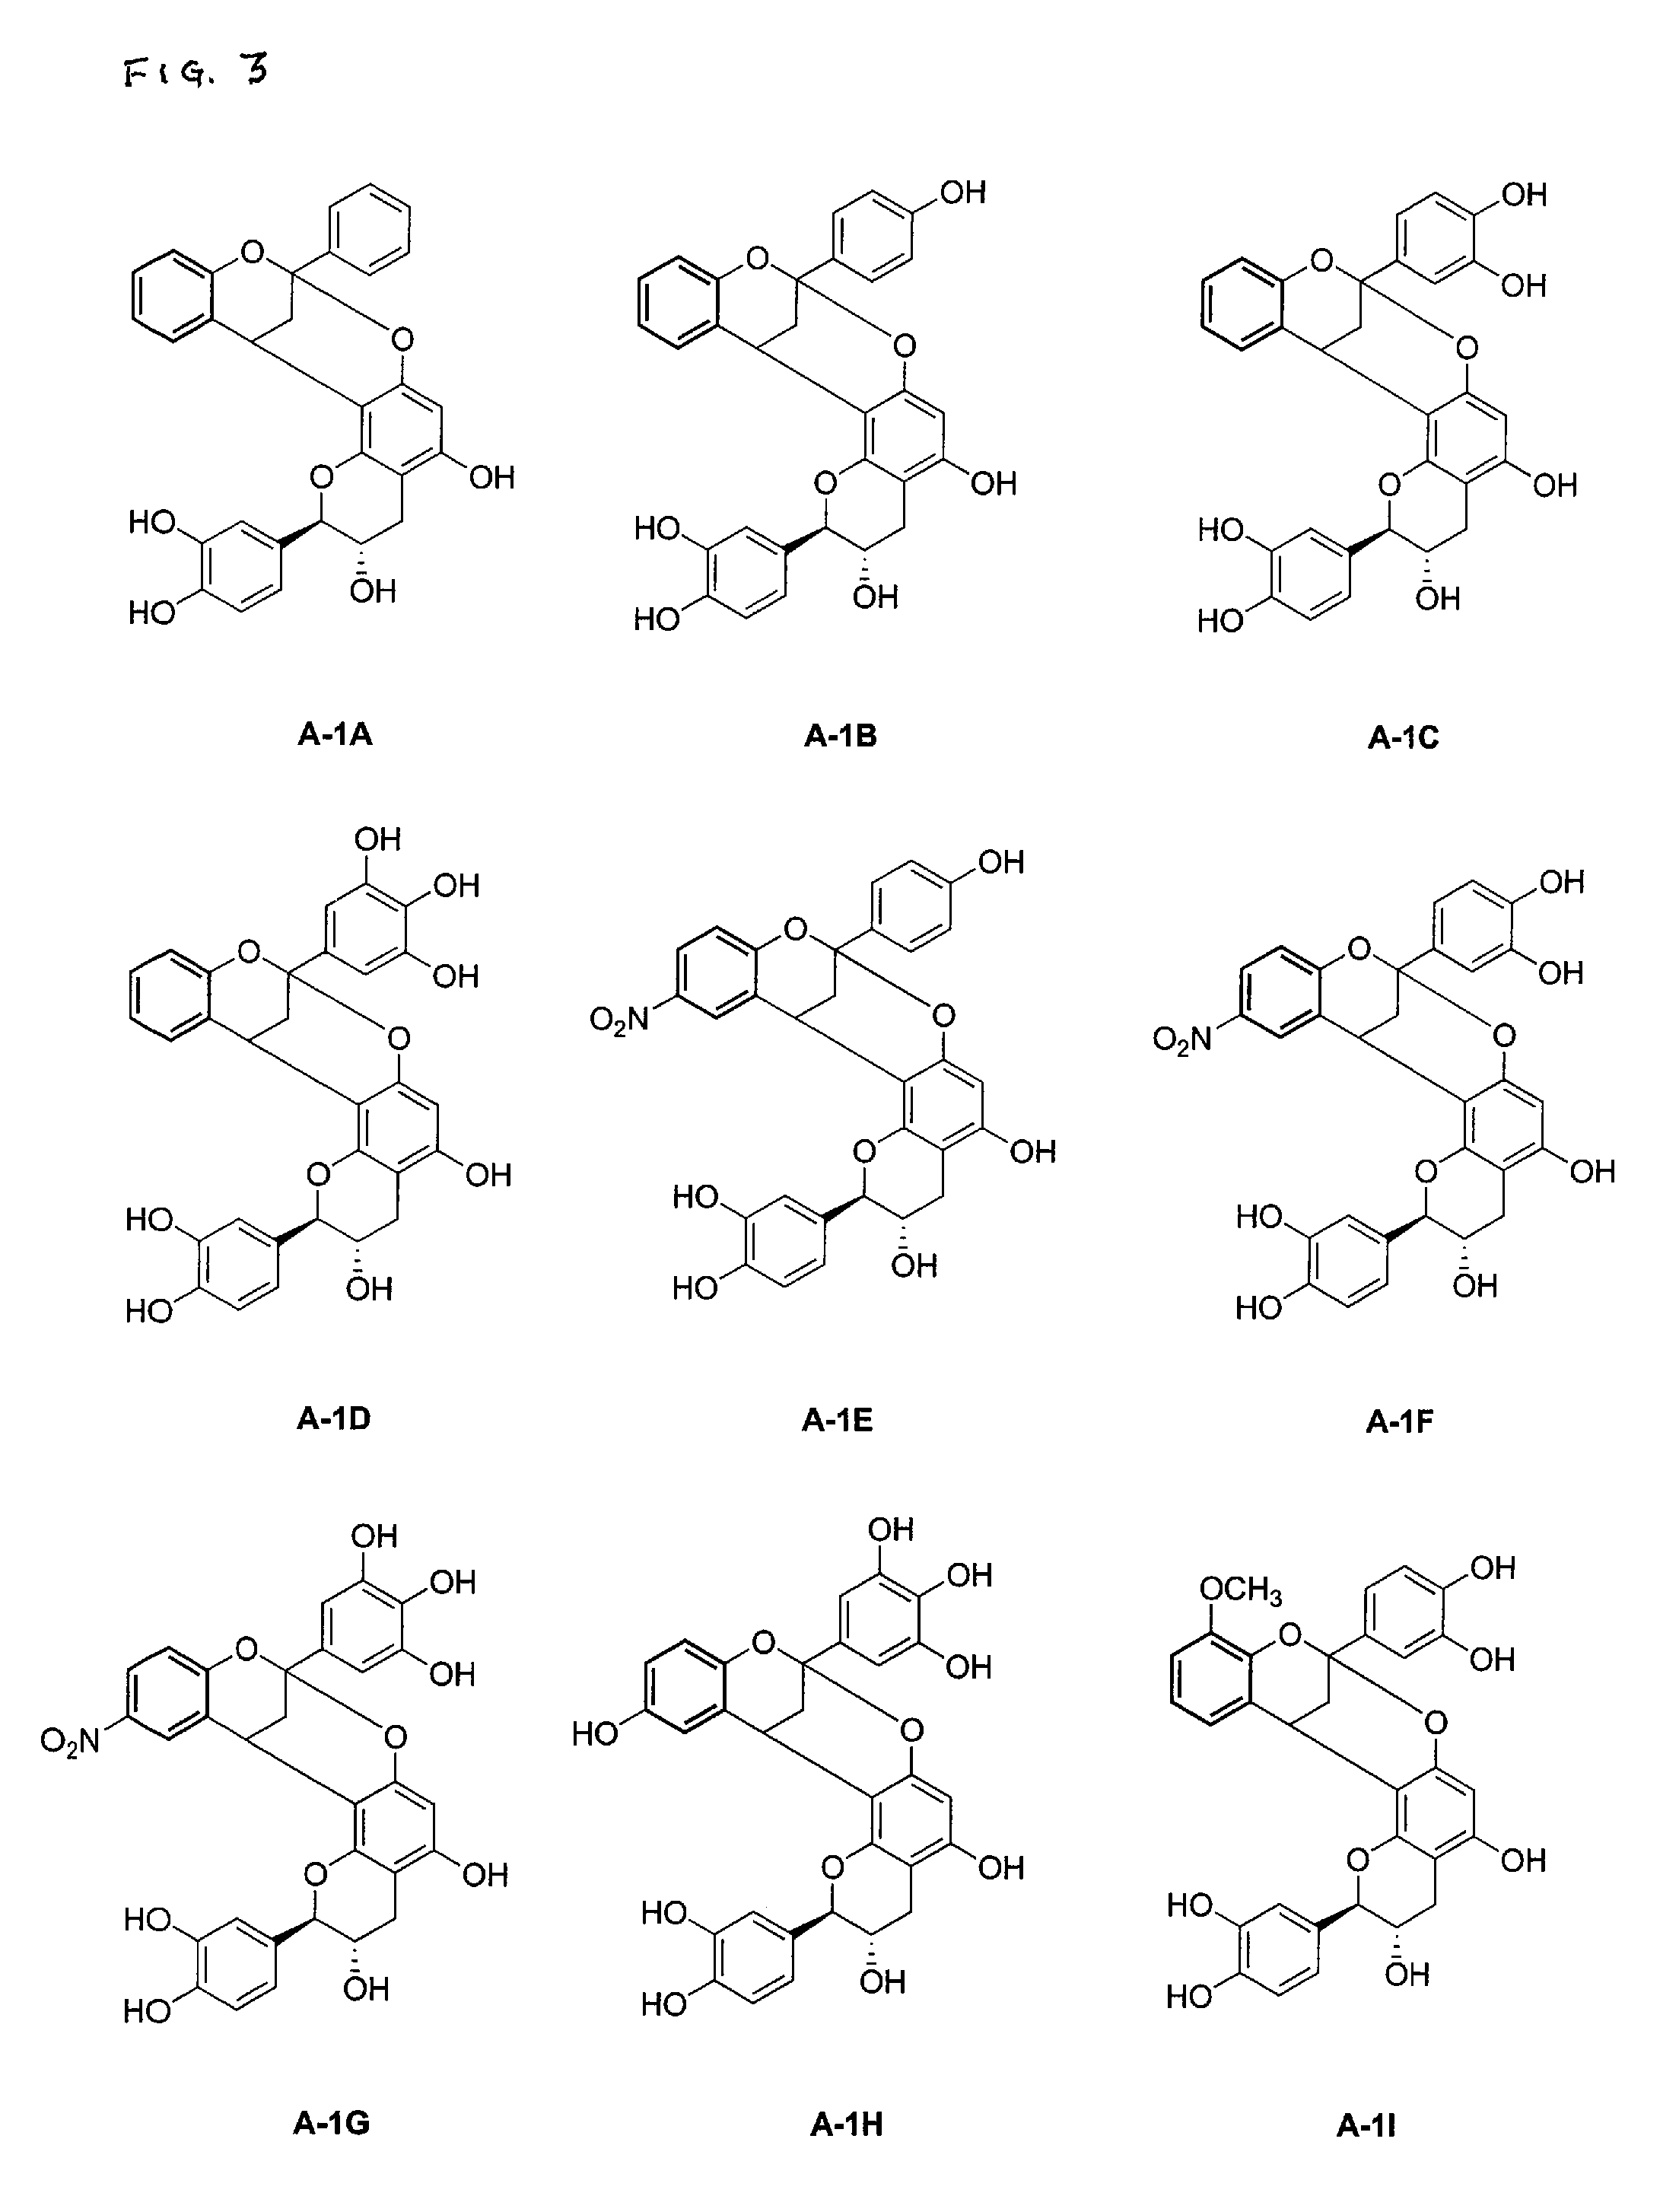 Synthesis of polycyclic procyanidins